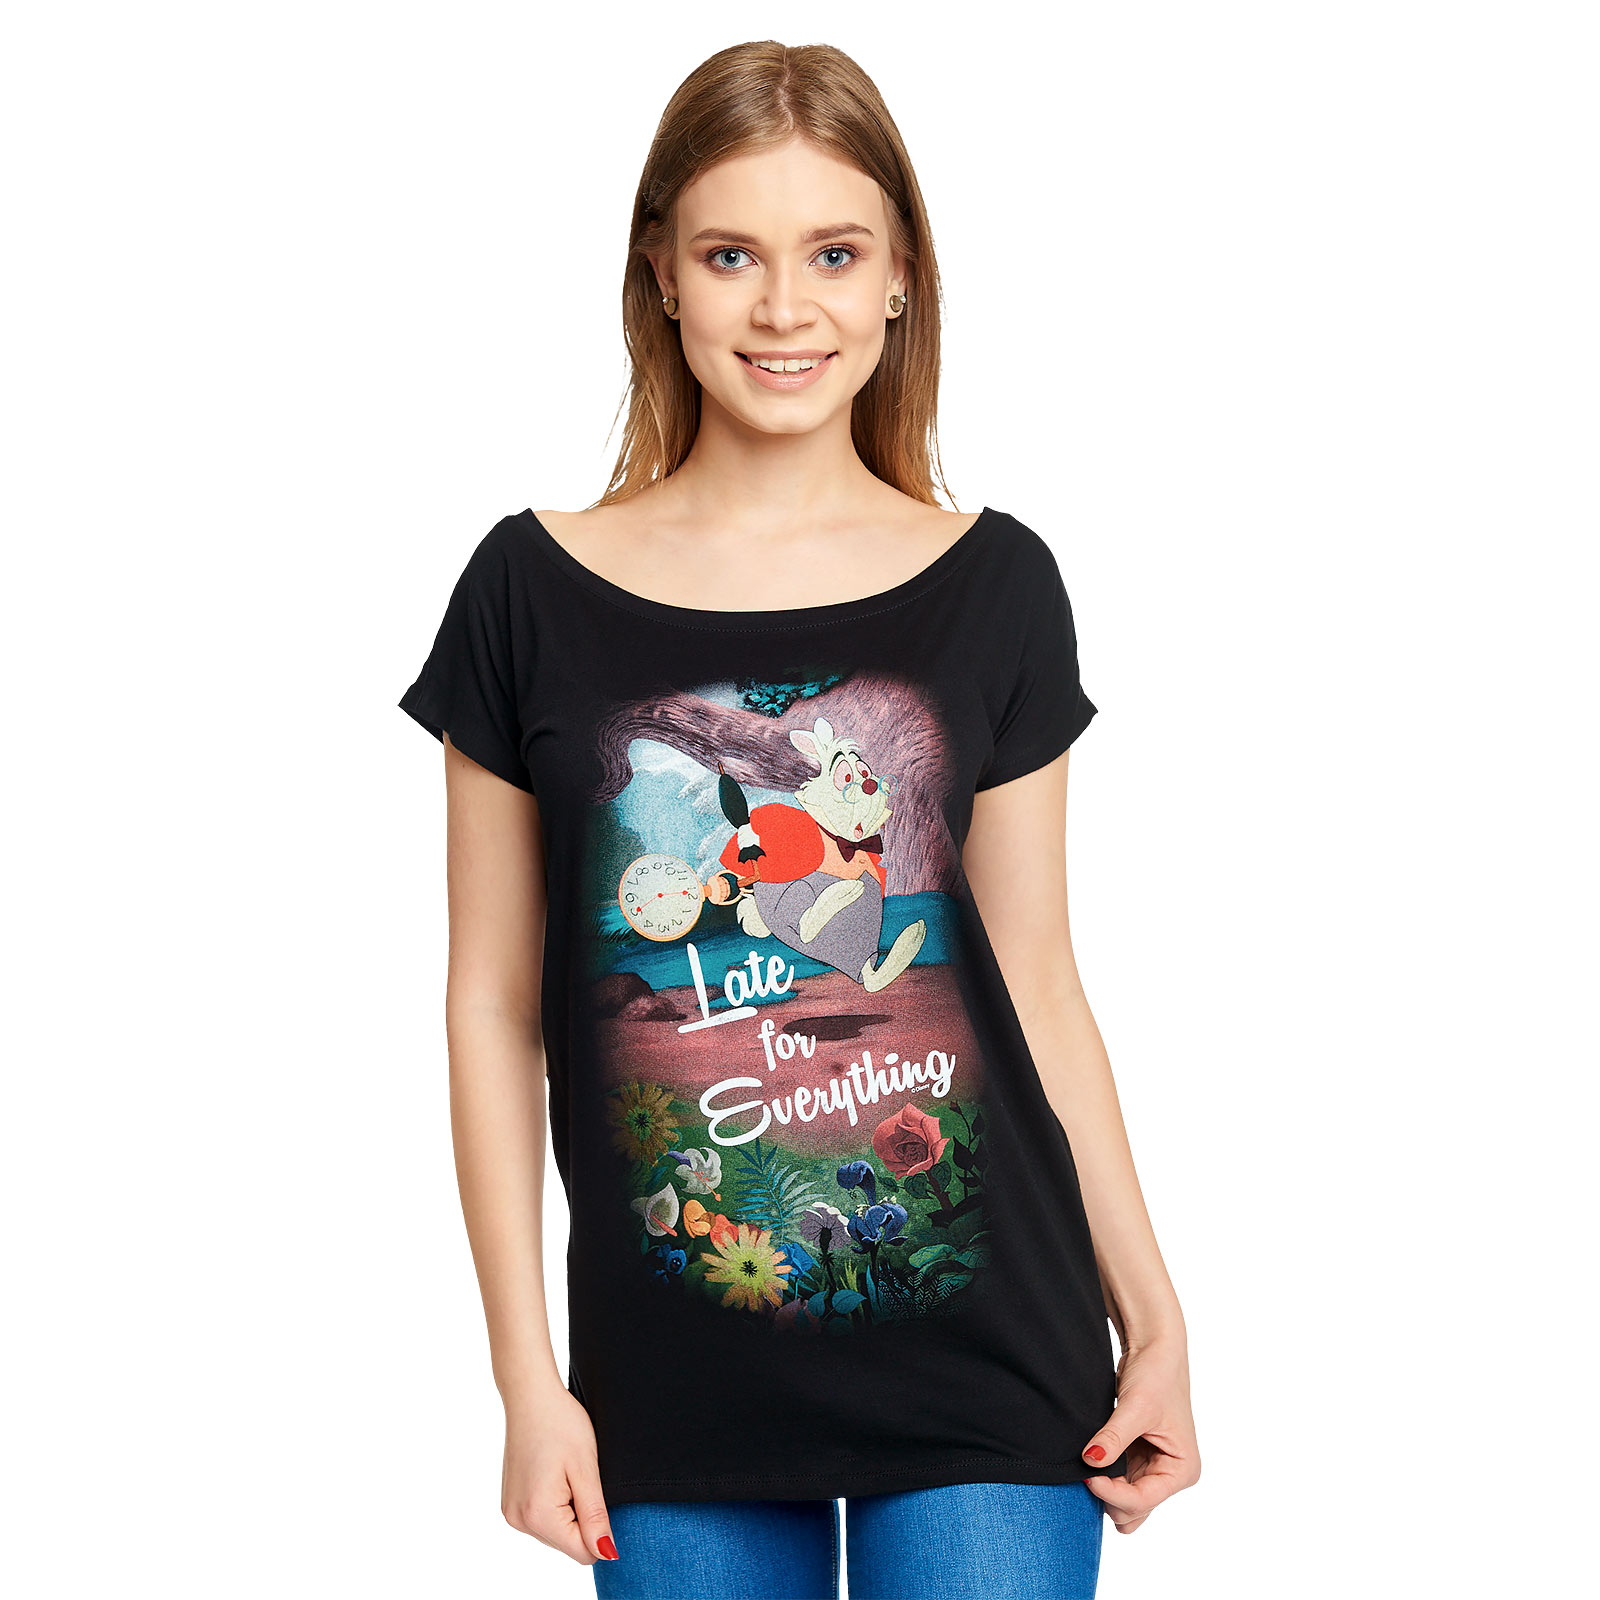 Alice in Wonderland - Late T-Shirt Women's Loose Fit Black